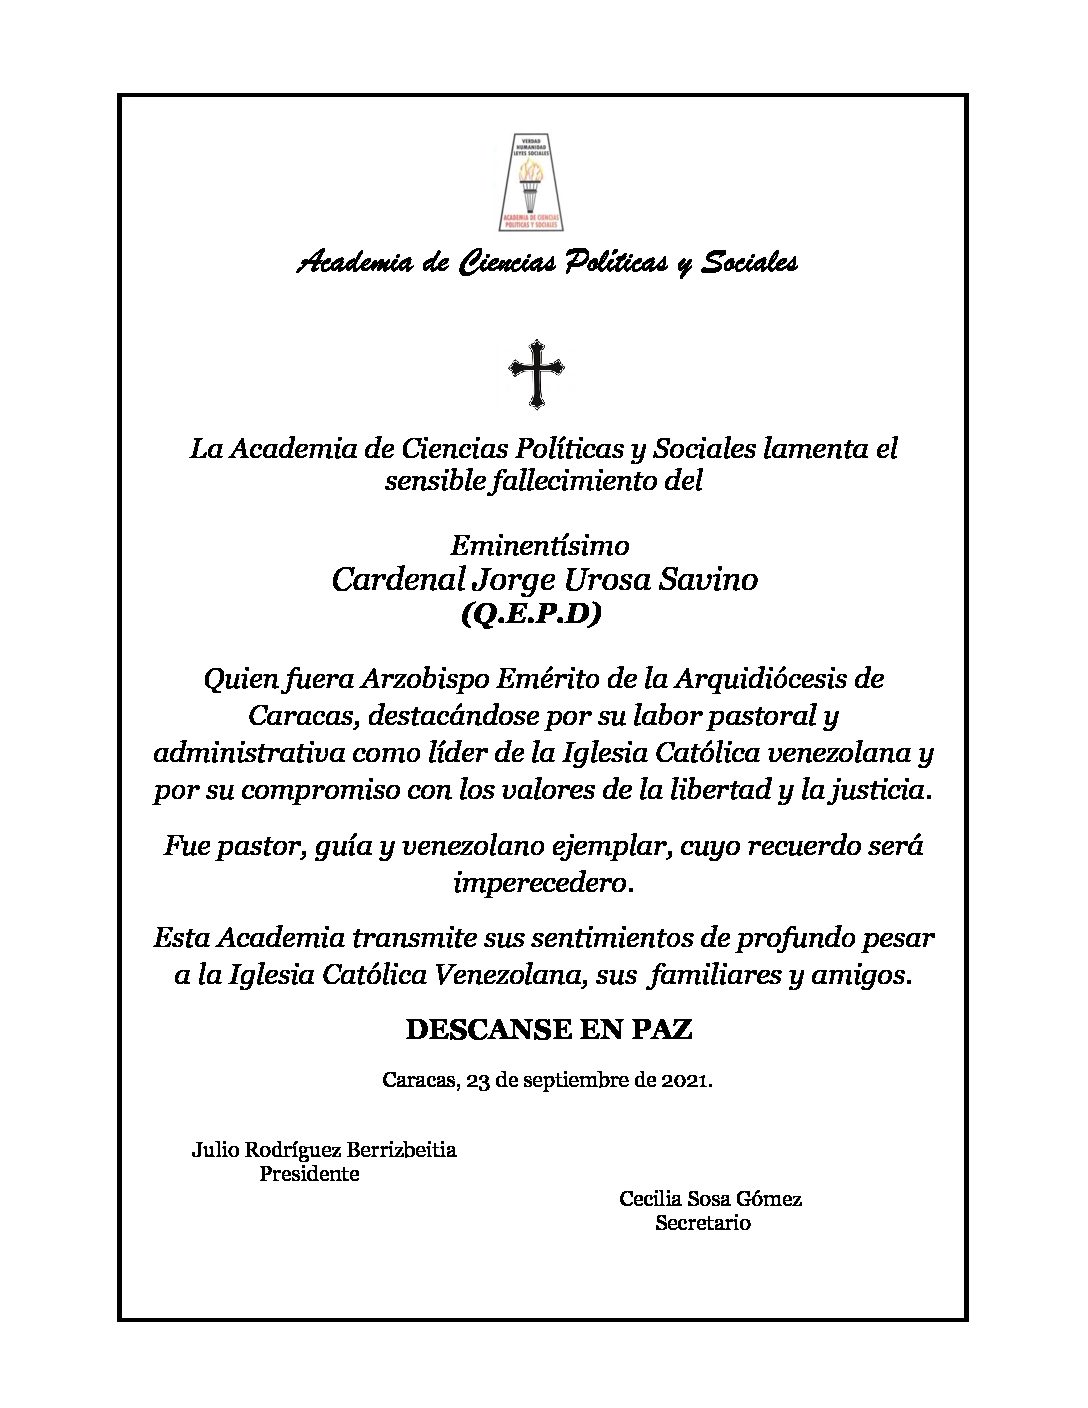 Nota de pesar por el sensible fallecimiento del Eminentísimo Cardenal Jorge Urosa Savino